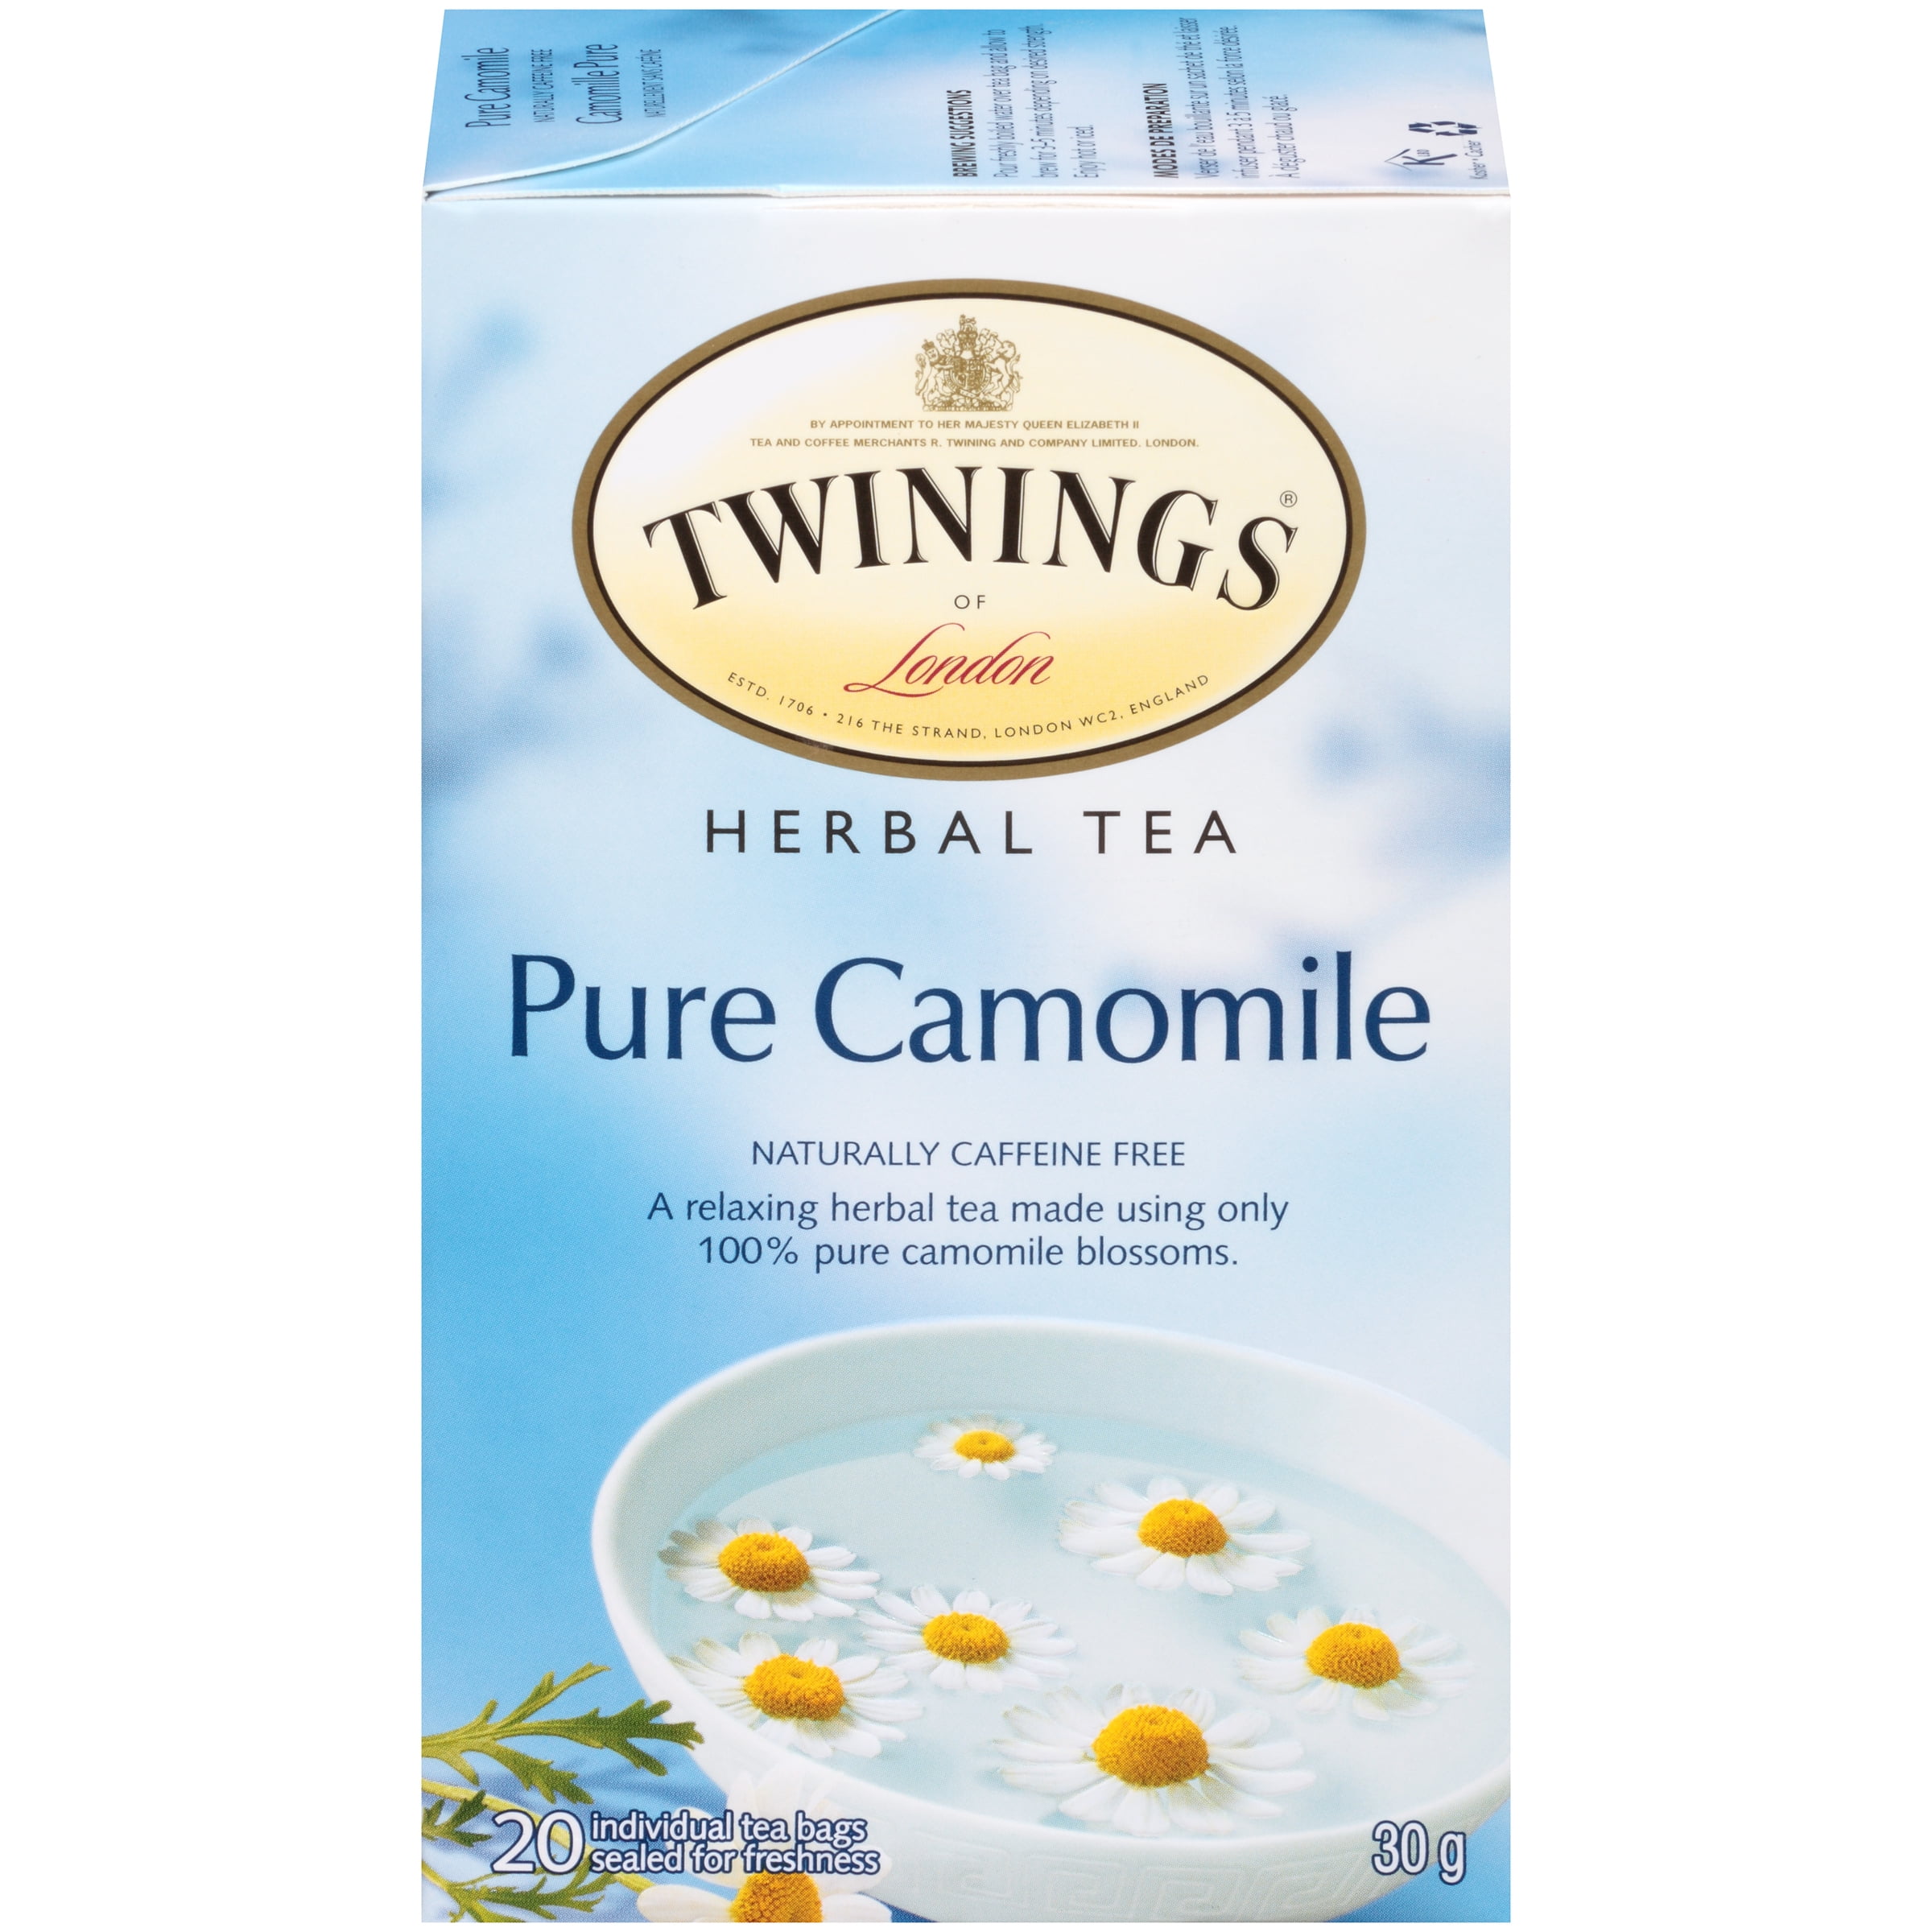 Twinings Pure Camomile Herbal Tea Bags, Caffeine Free, 20 Count Box